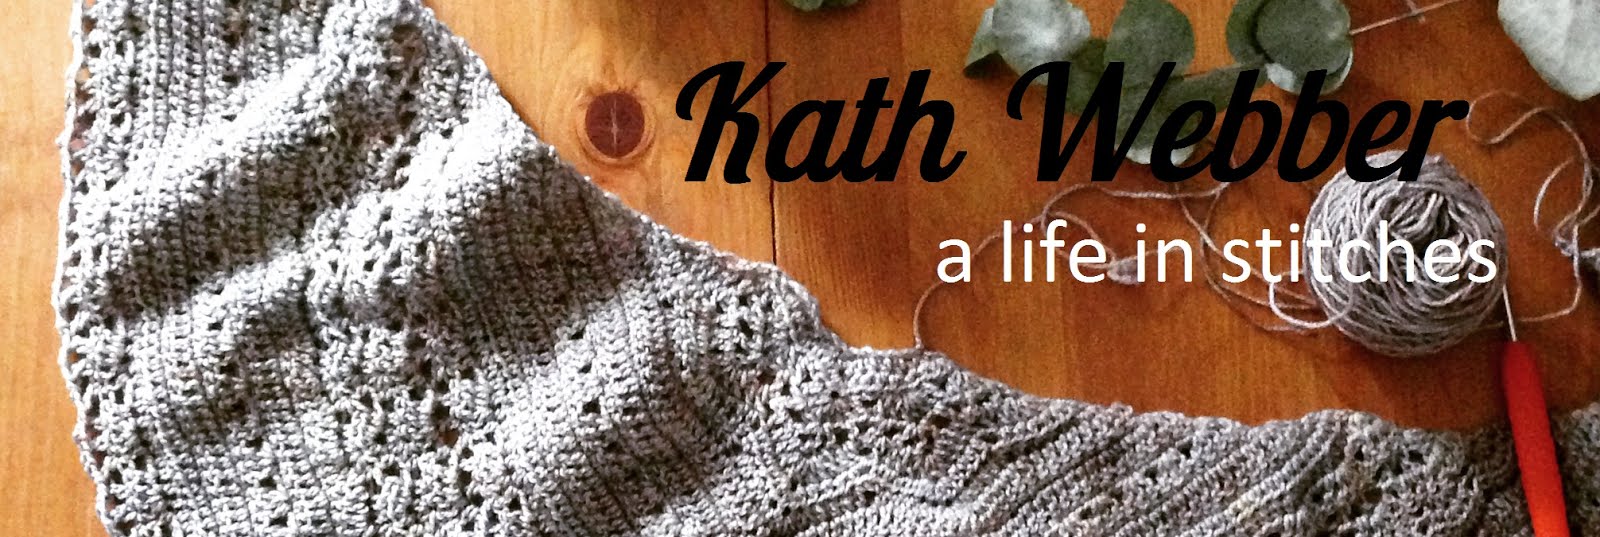 Kath Webber Crochet